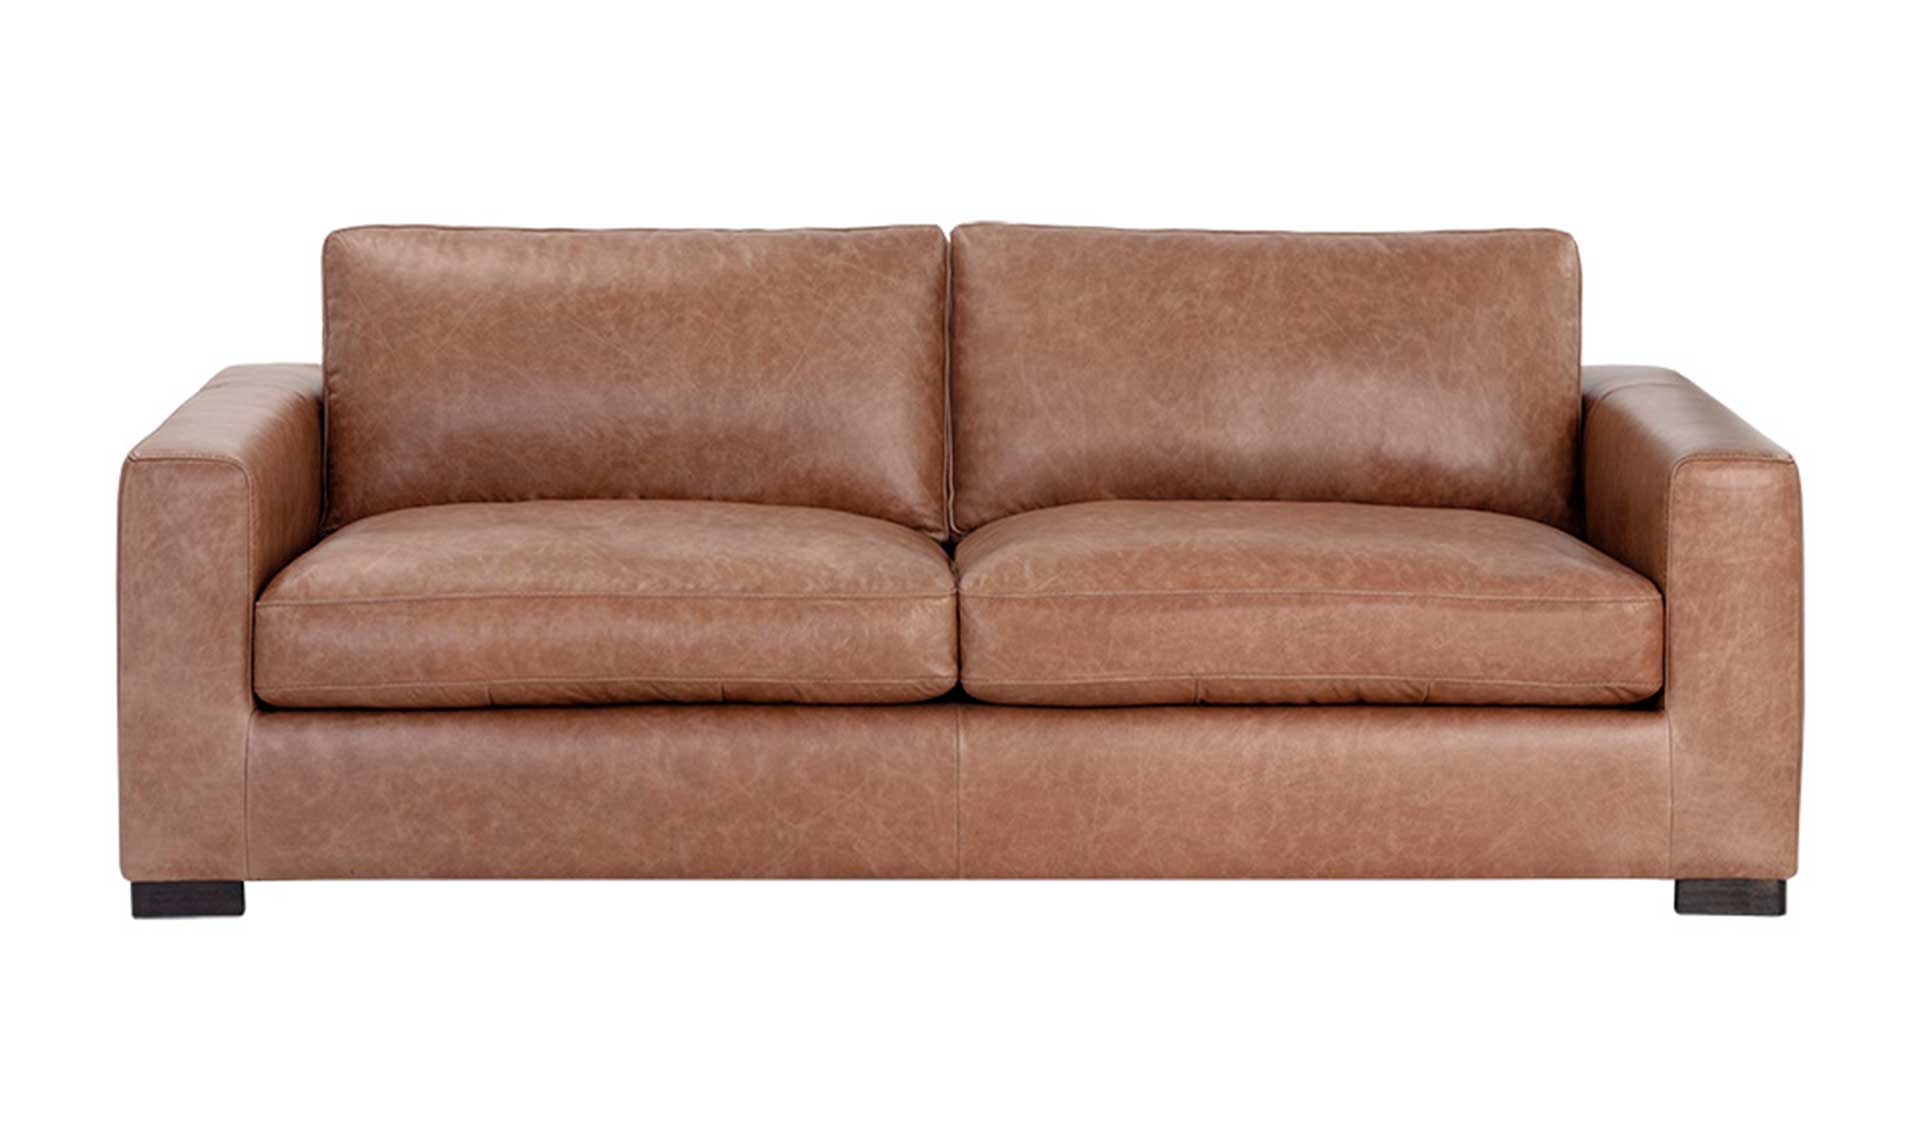 baylor sofa marseille camel leather full 2